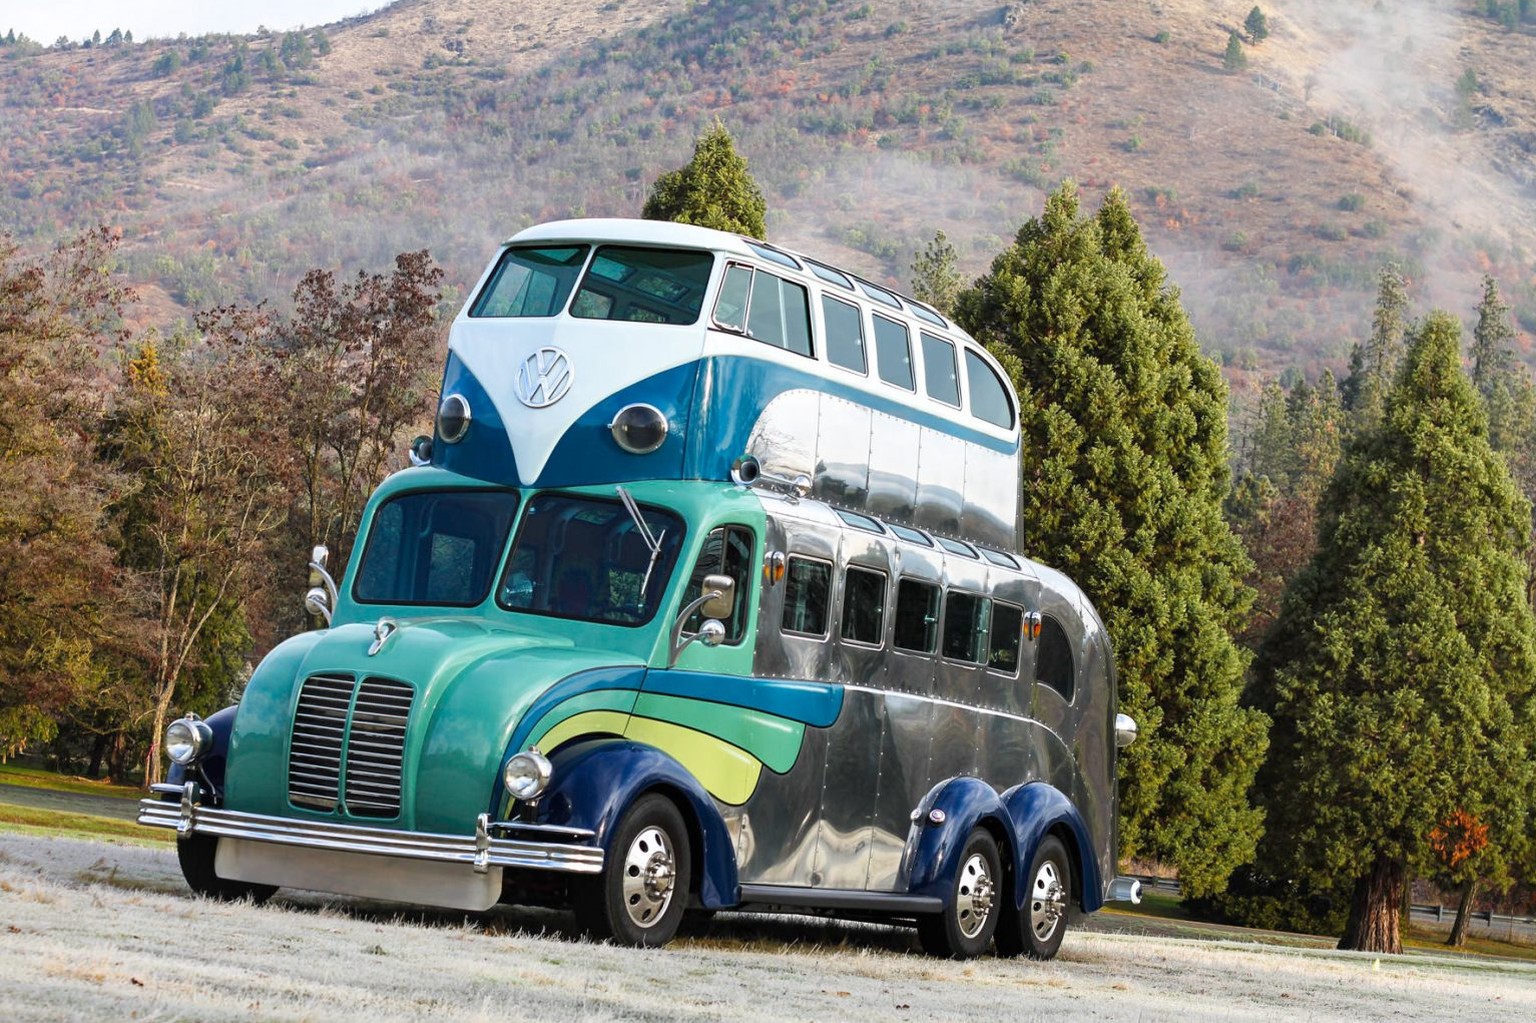 randy grubb happy bus auto motor custom kustom kulture kalifornien https://silodrome.com/randy-grubb-magic-bus/